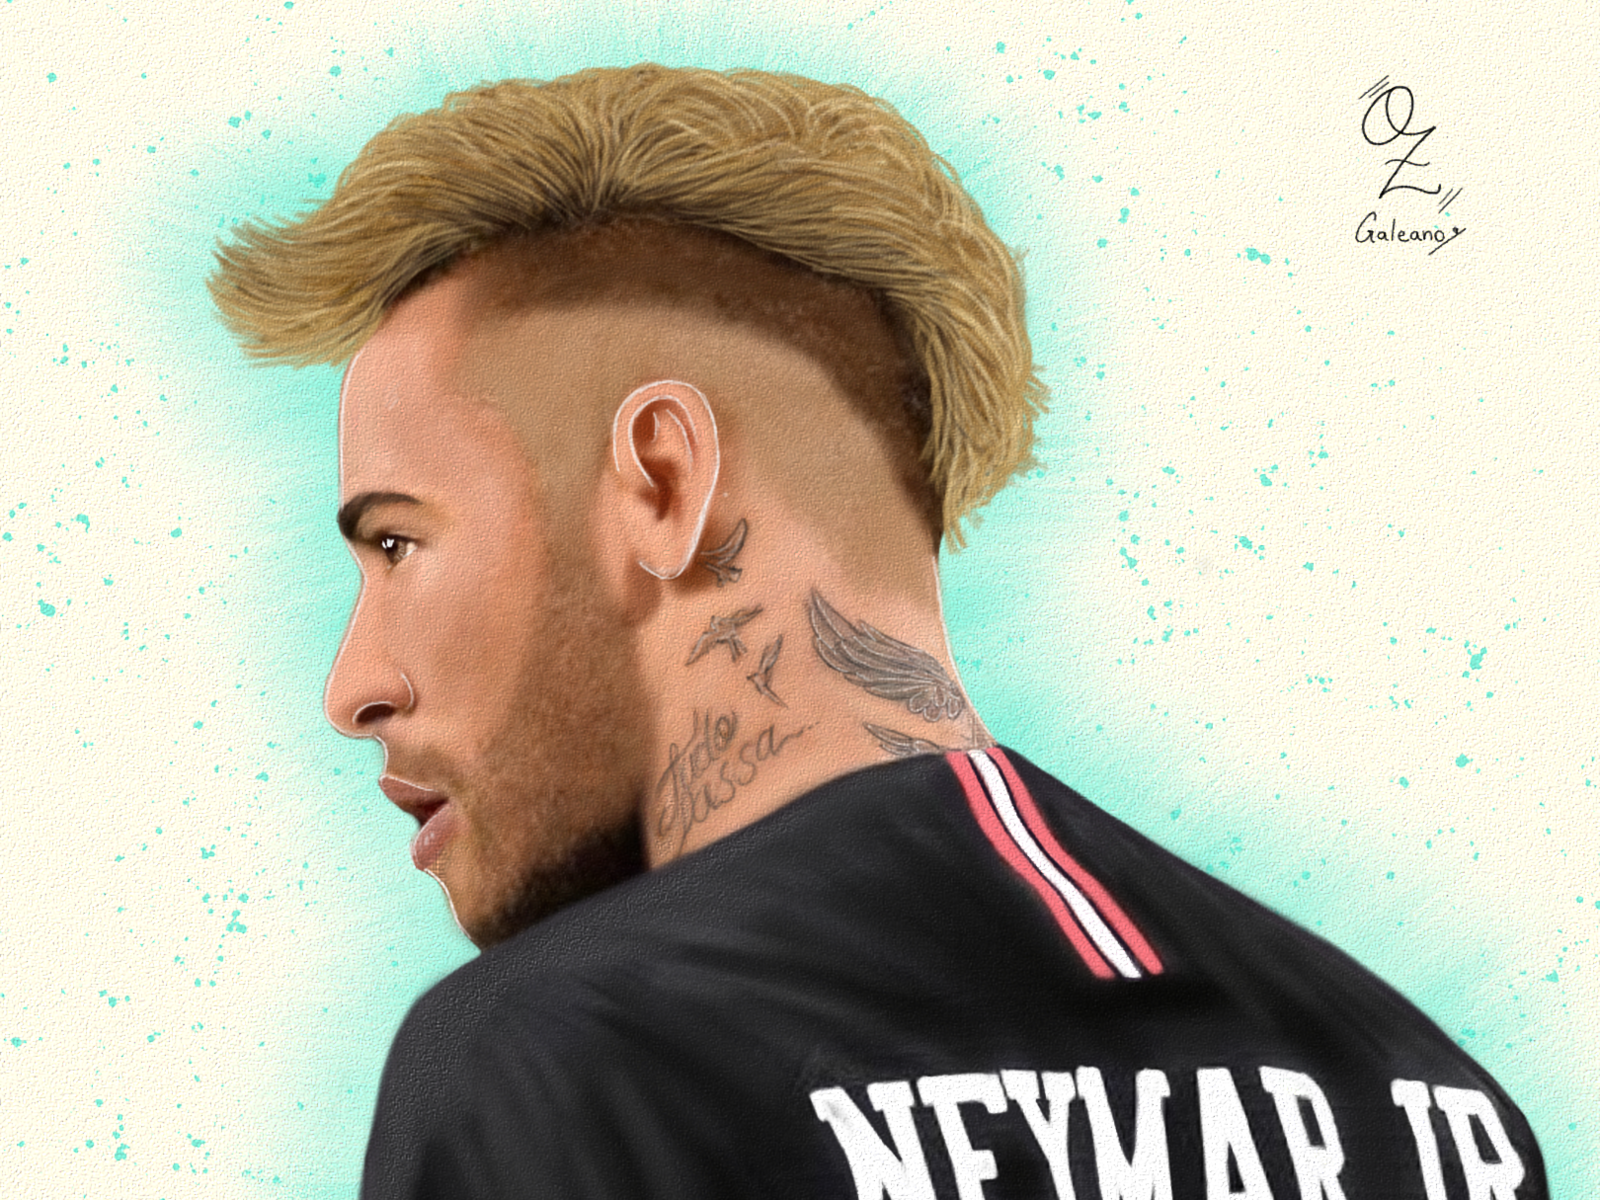 Neymar Oz Galeano art arte brasil dibujo digitalart drawing fanart football france futbol league1 mexico neymar ozgaleano psg